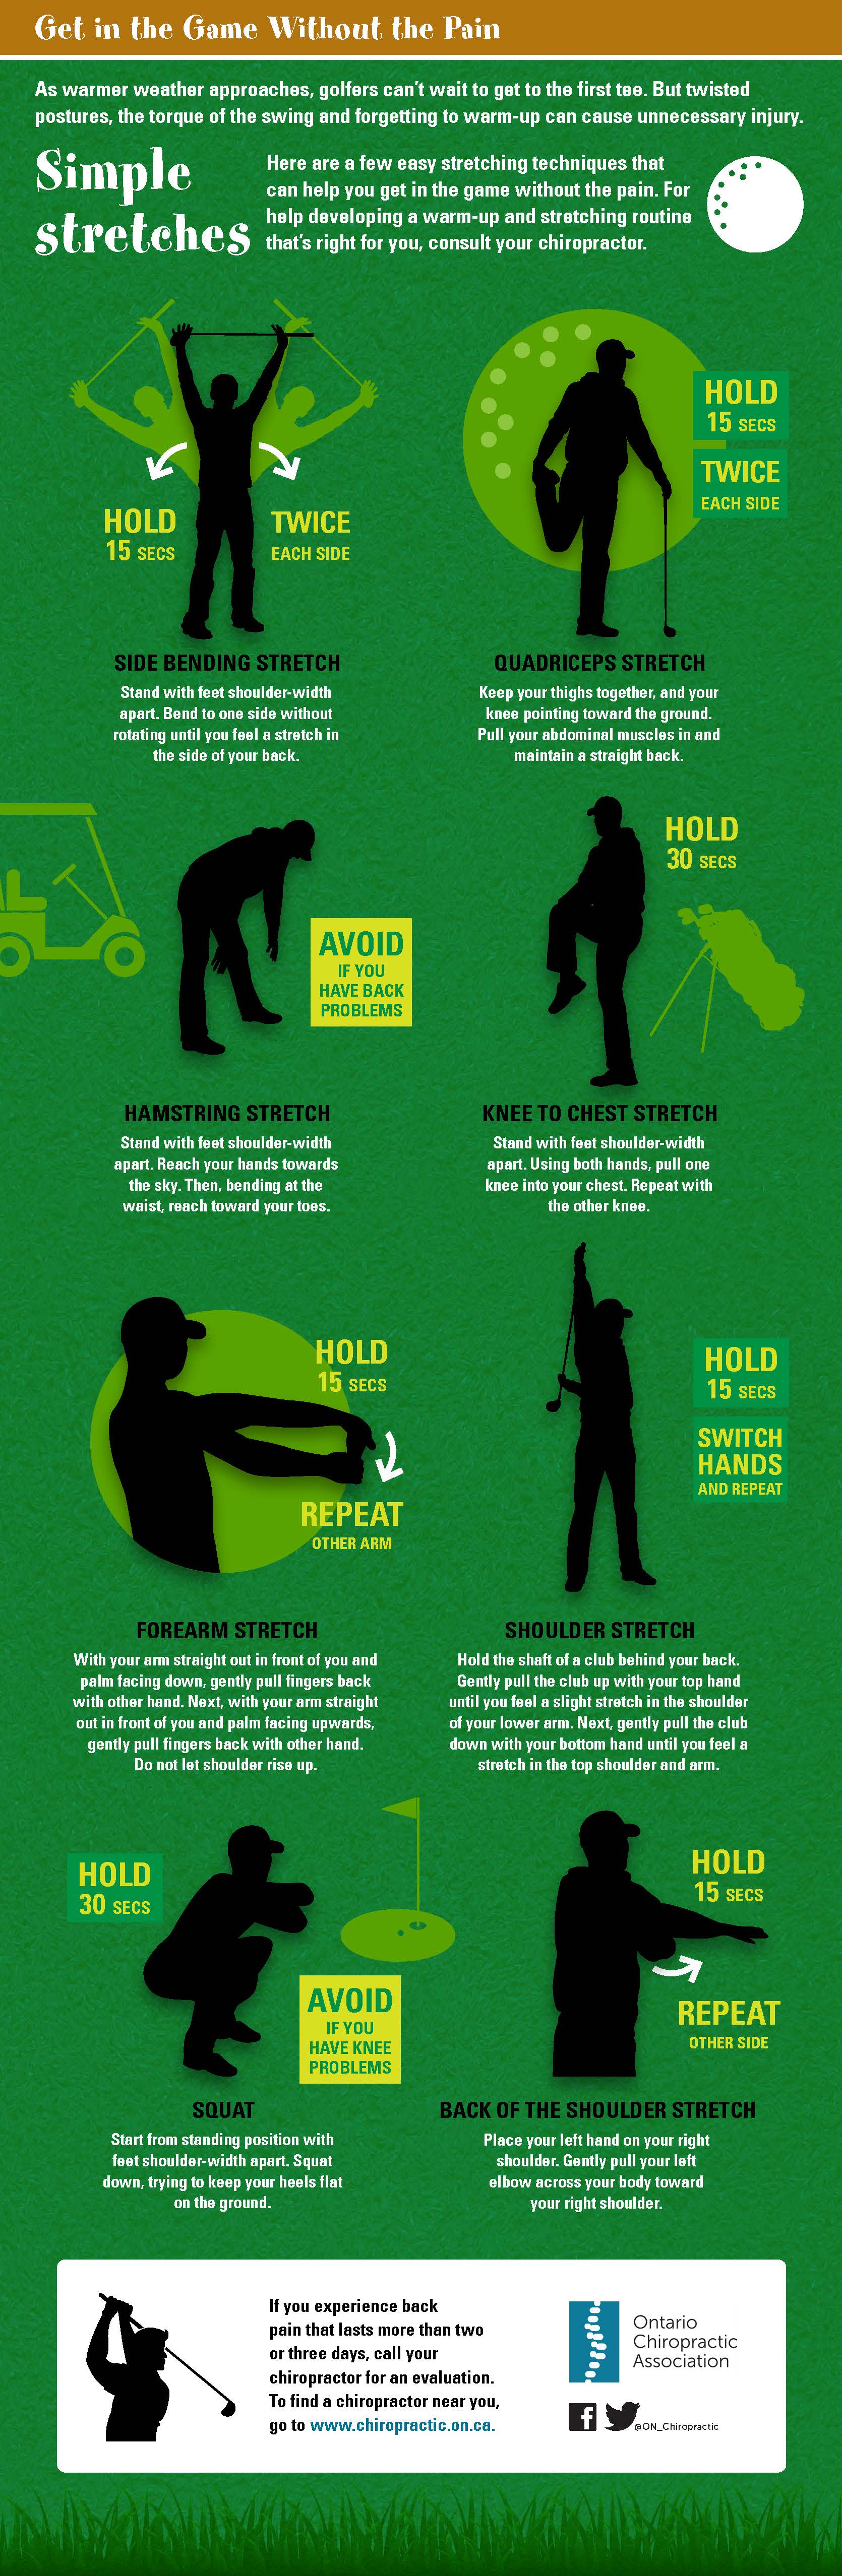 OCA_Golf_Infographic